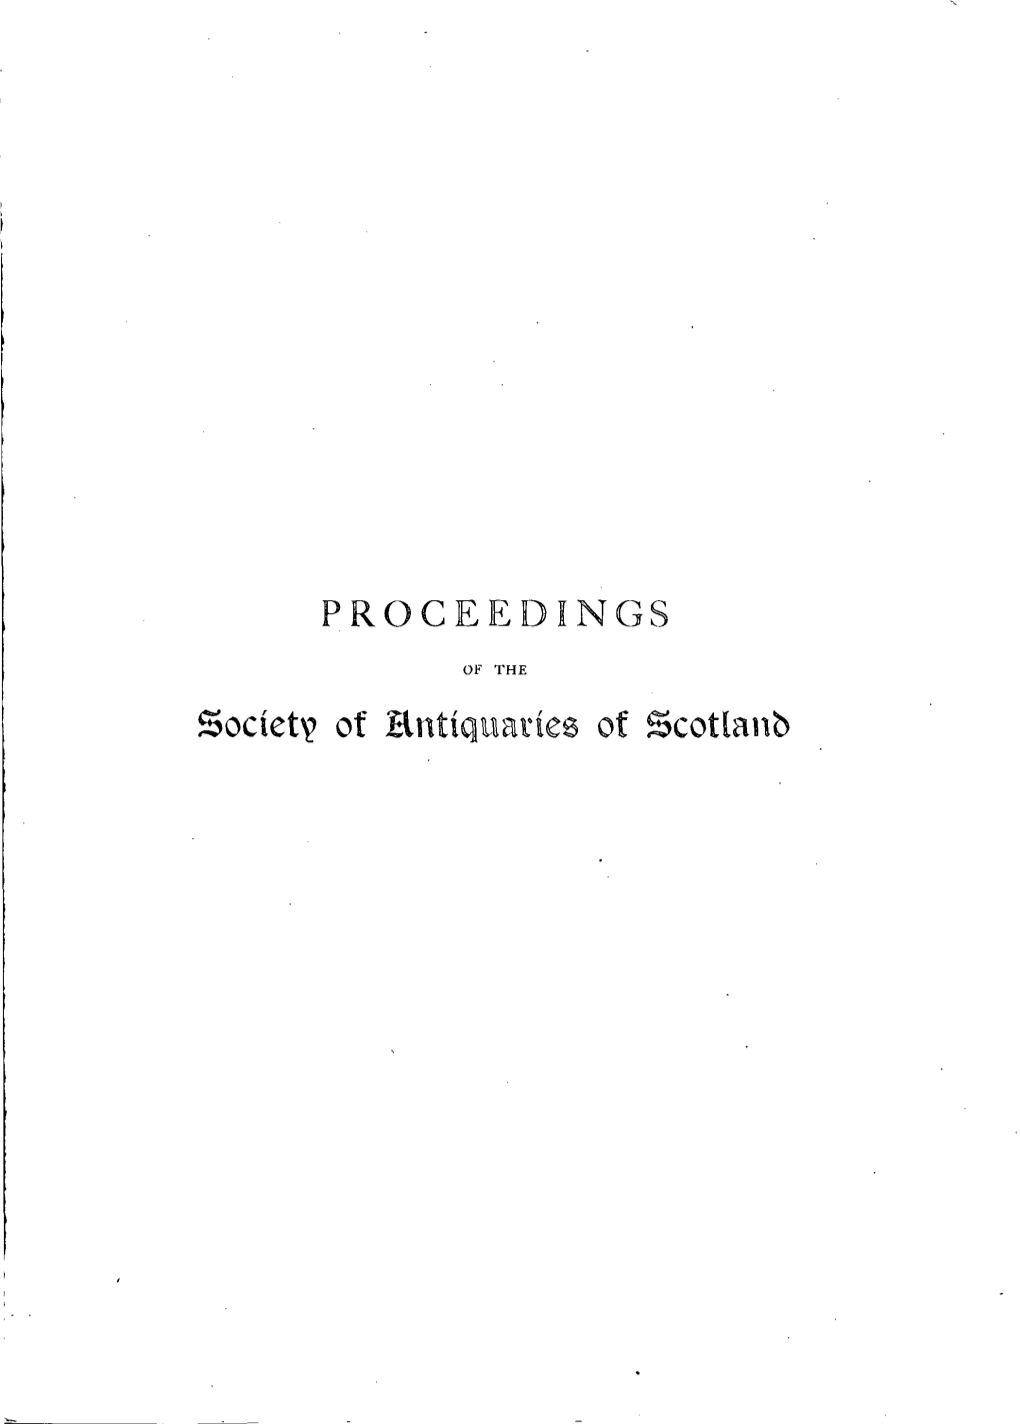 Society of Hnttquartes of Scotland PROCEEDING